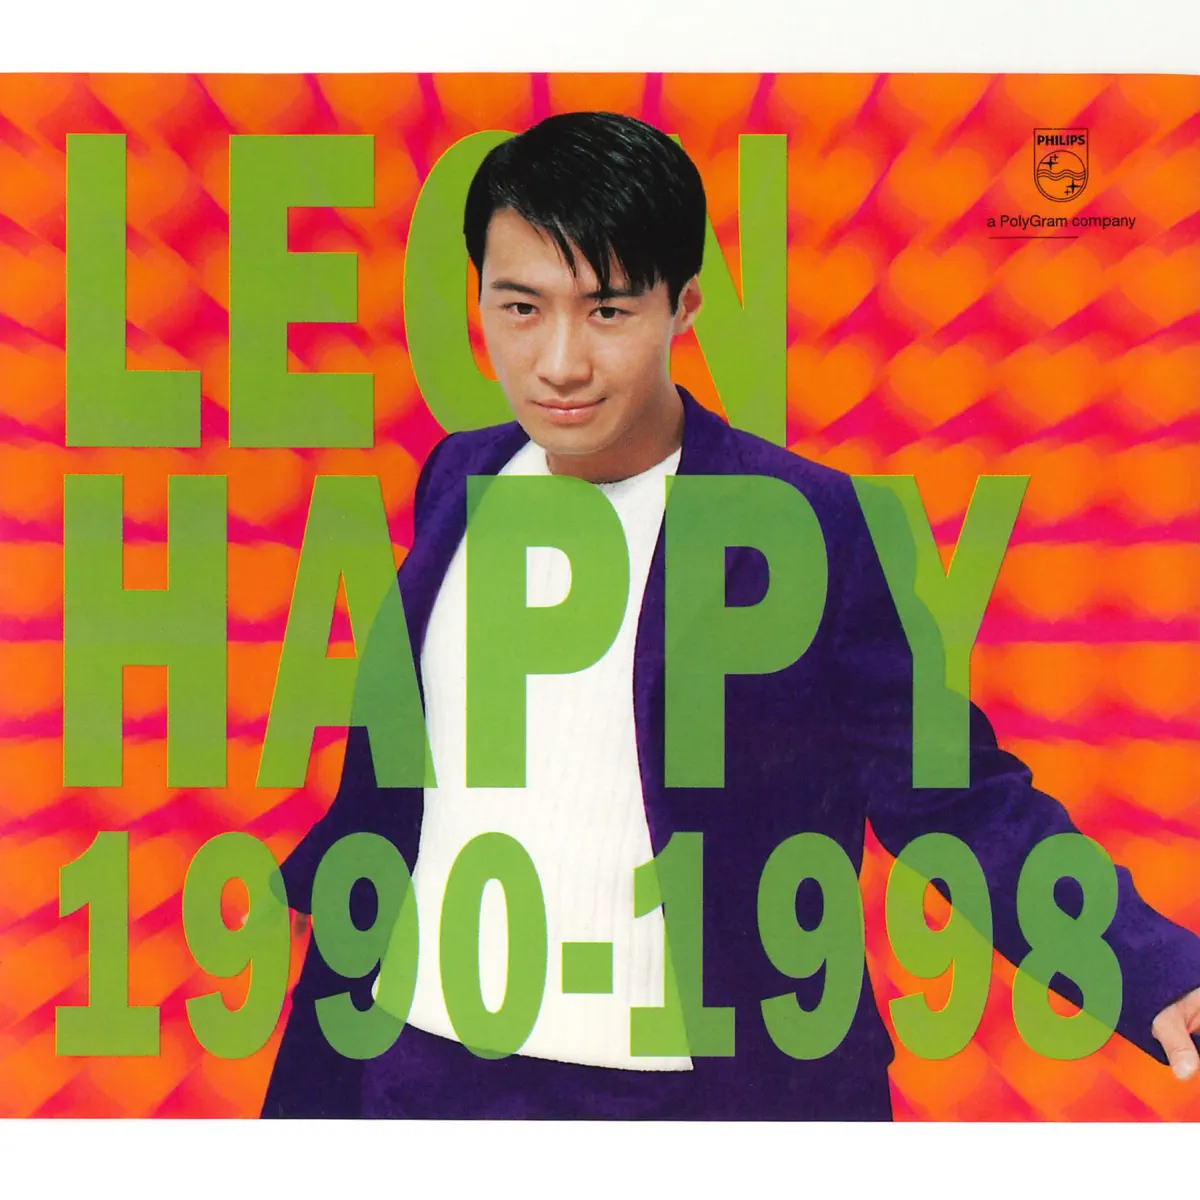 黎明 - Leon Happy 1990-1998 (1998) [iTunes Plus AAC M4A]-新房子